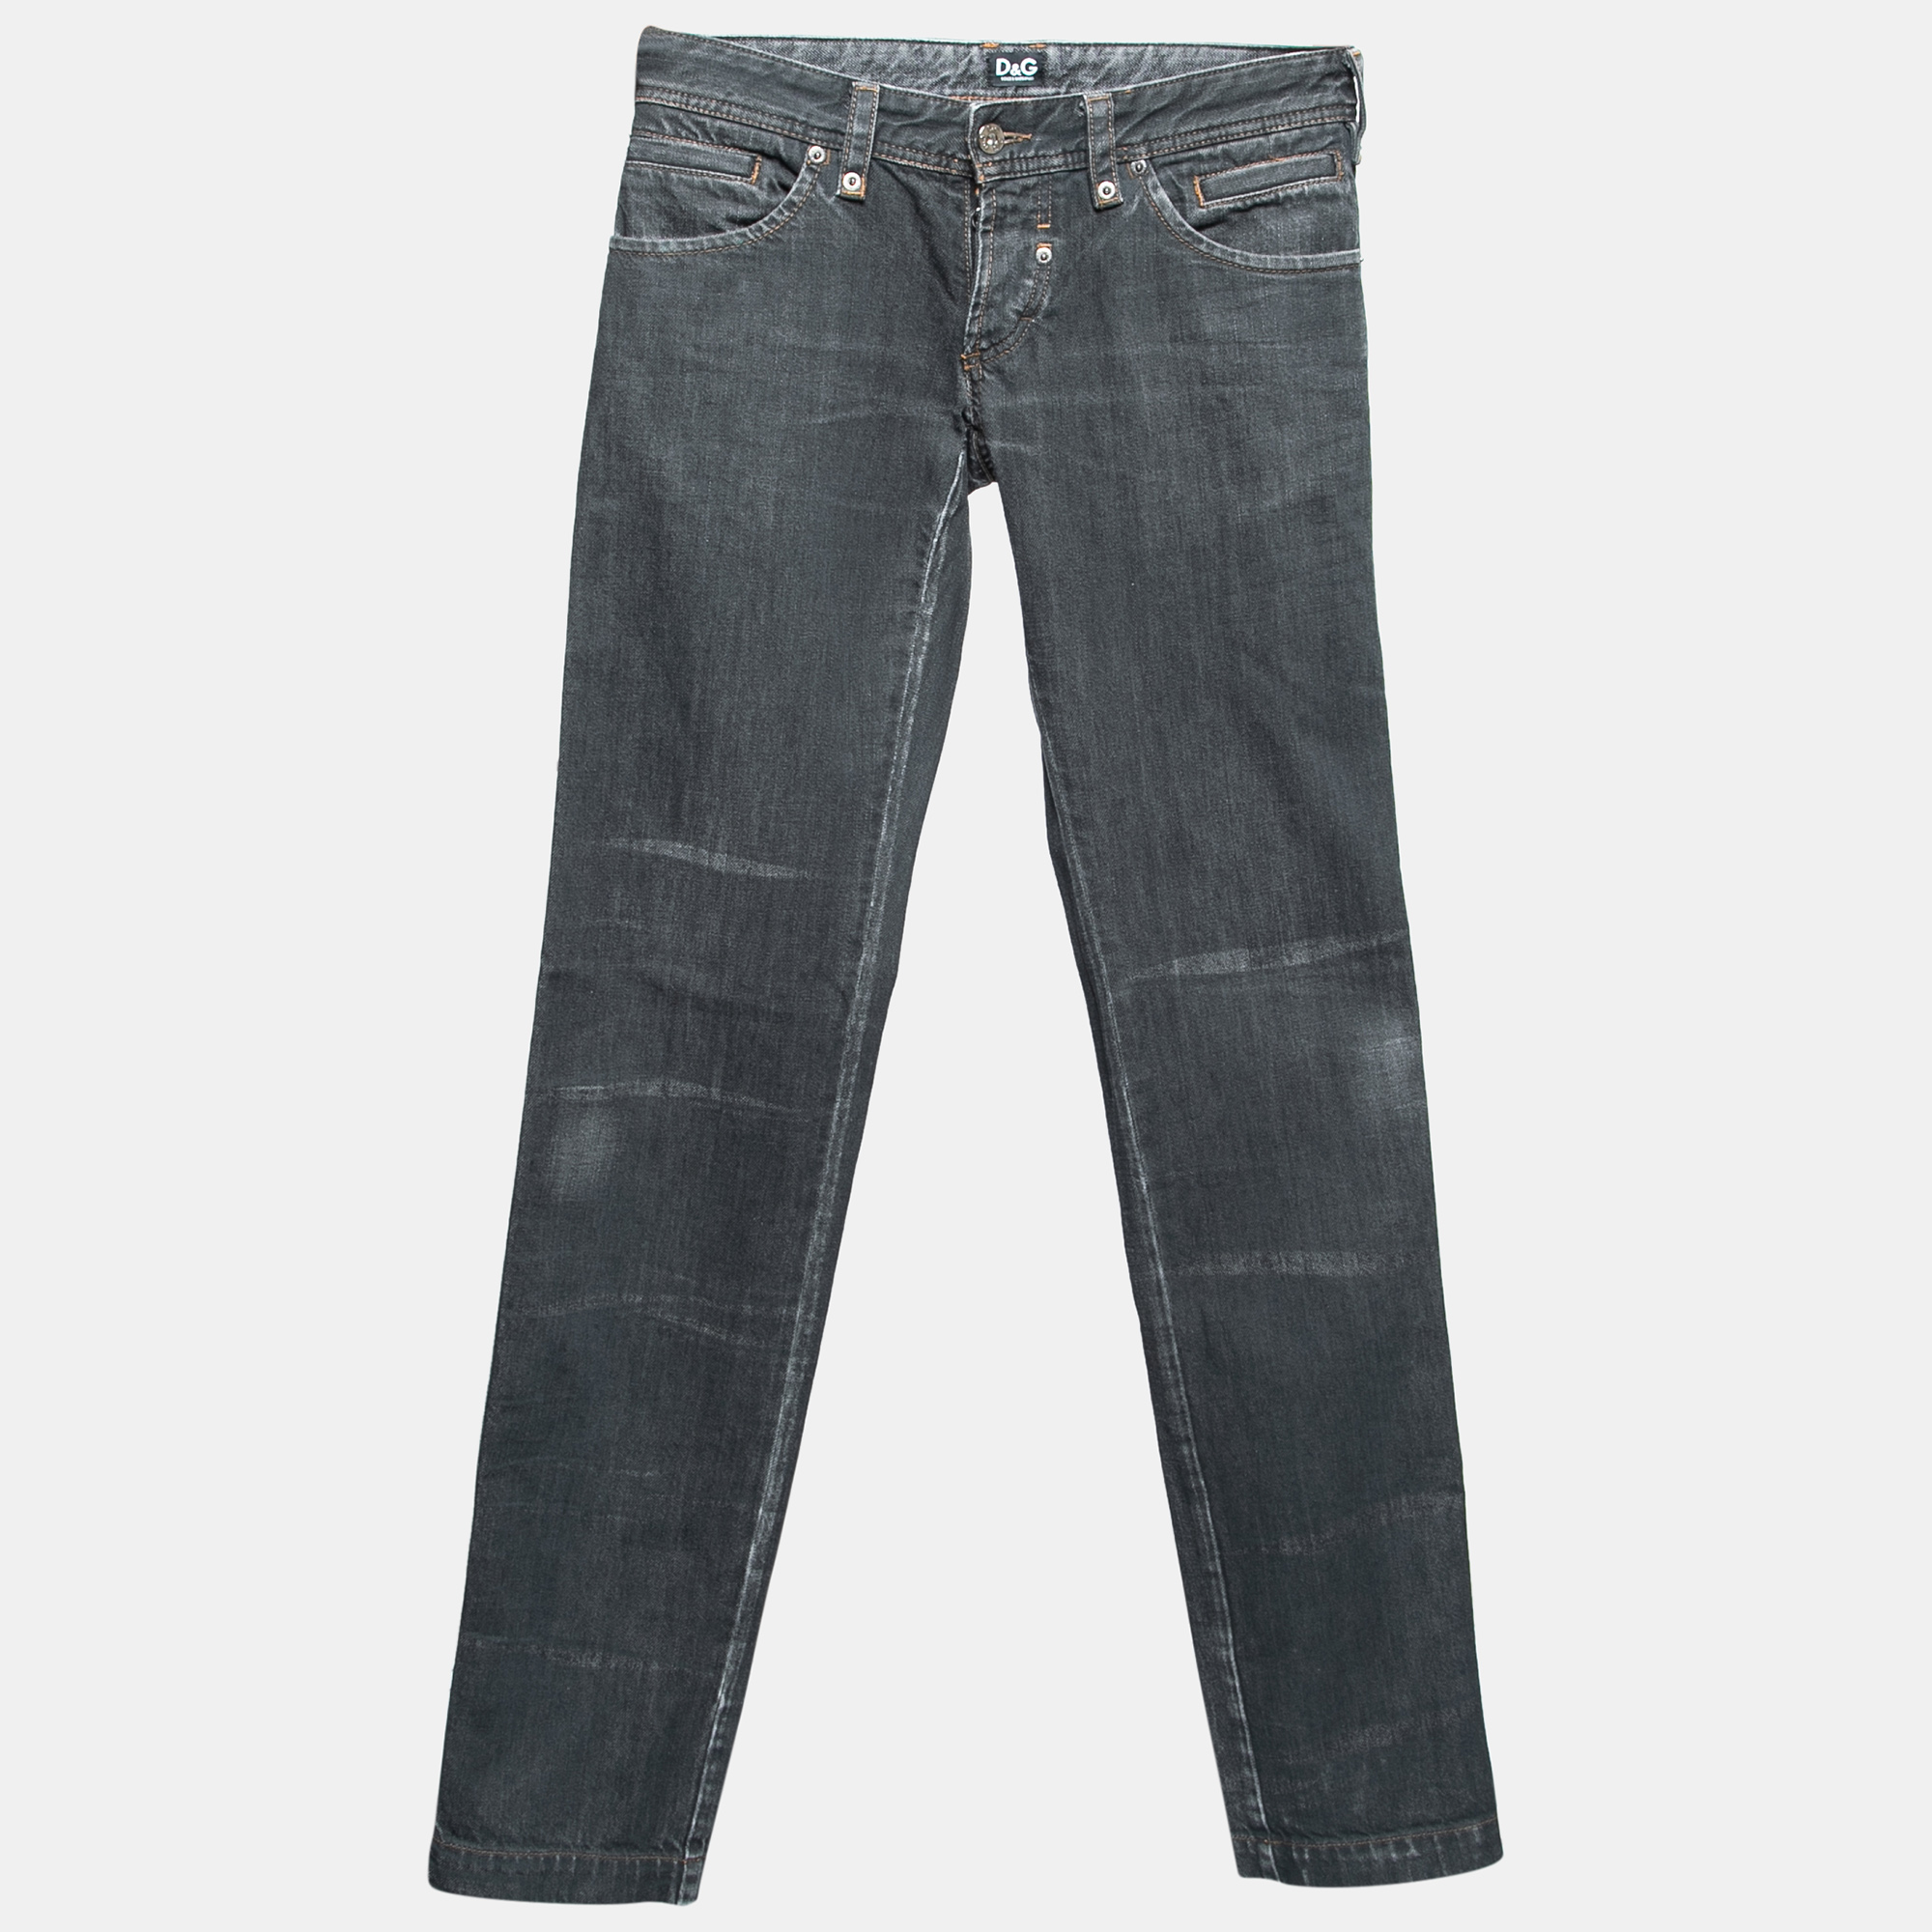 D & G Charcoal Grey Denim Low Rise Regular Fit Jeans Waist 30